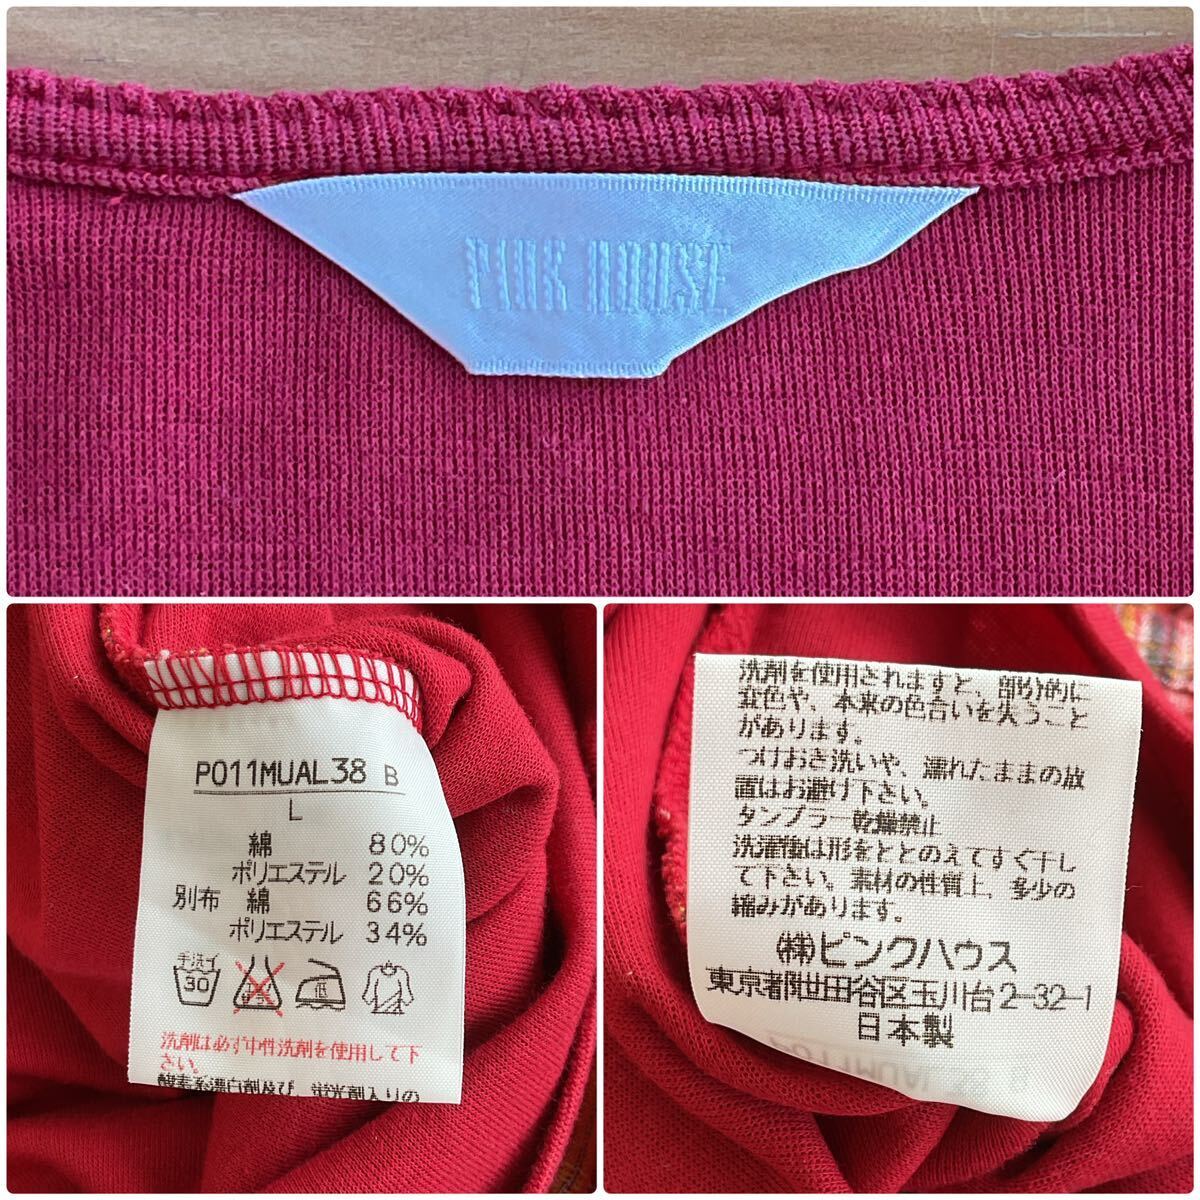 PINK HOUSE ピンクハウス 袖裾チェックキーネックトップス バック襟リボン異素材ドッキングコットンカットソー 長袖 レッド赤色系 Lの画像5